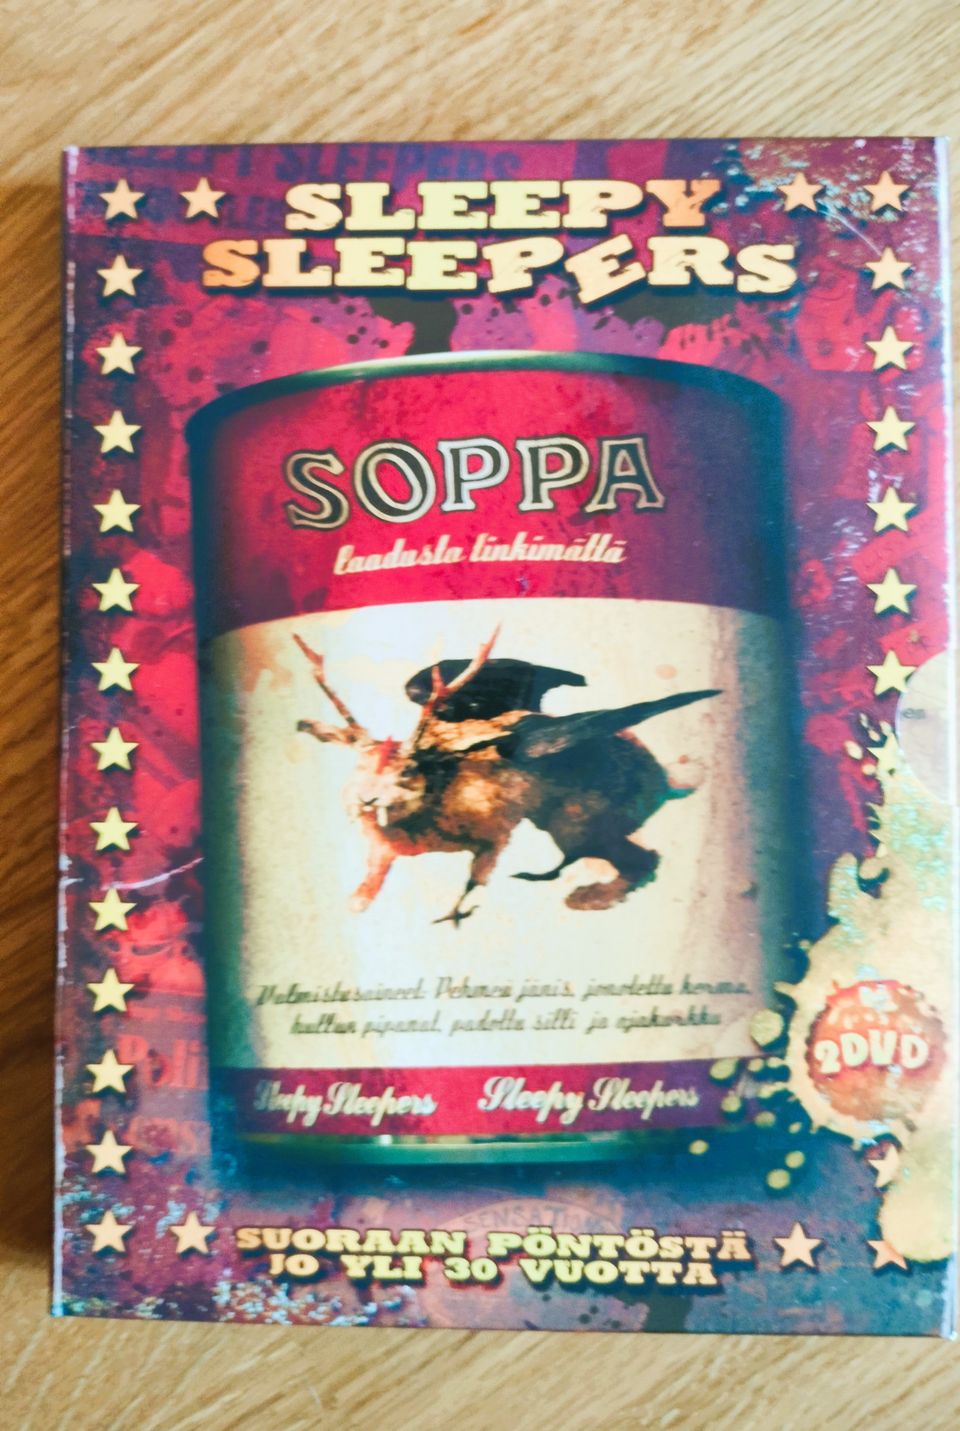 Sleepy Sleepers - Soppa DVD